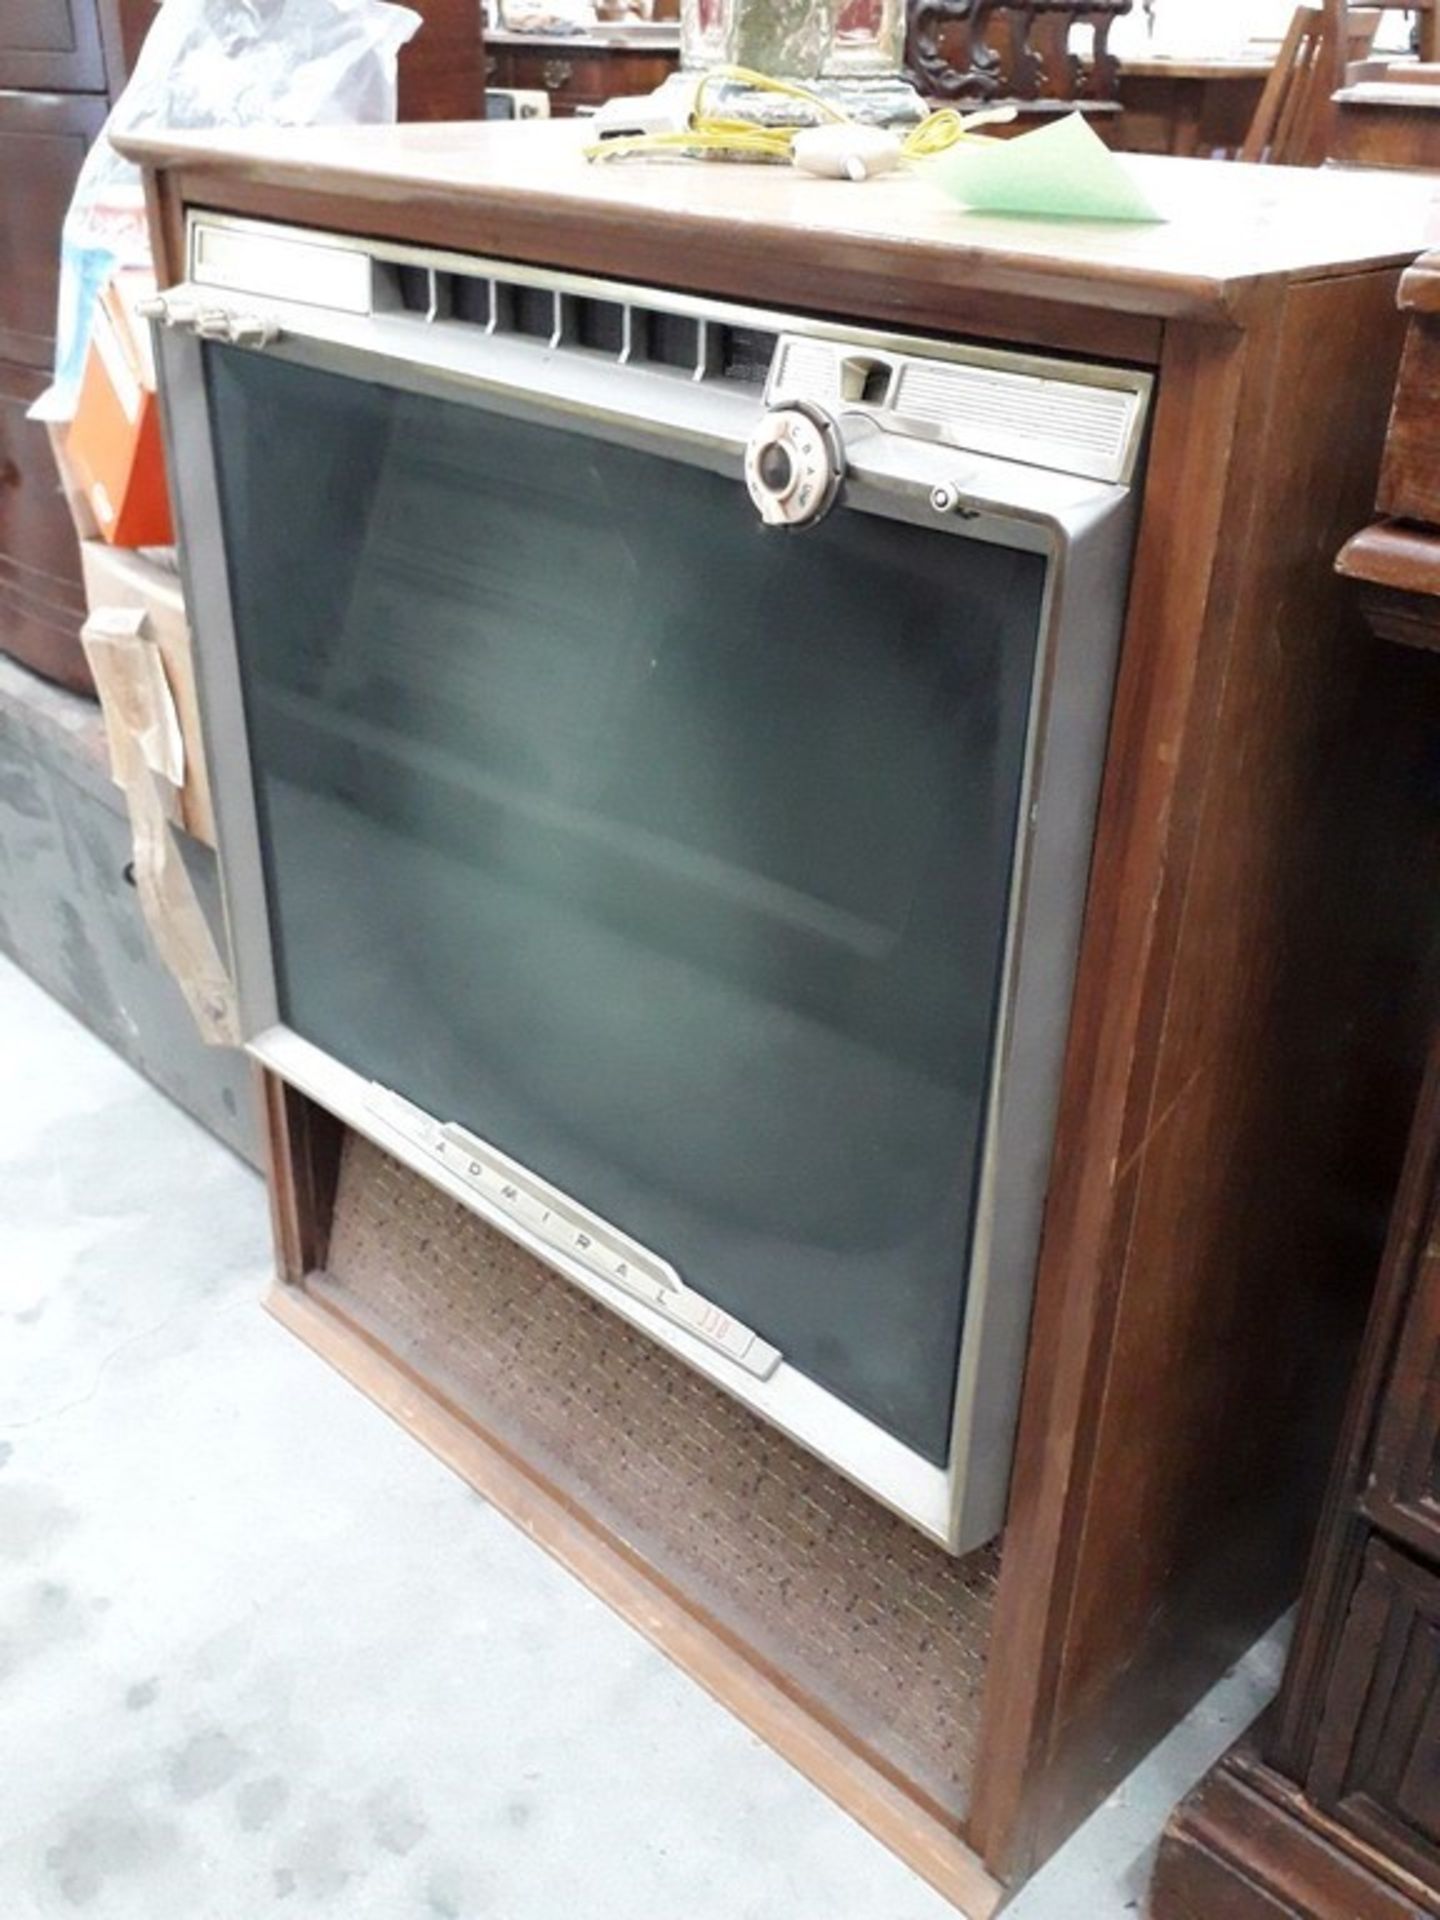 N. 177 (V.F. 928) TV MARCA IMPERIAL ADMIRAL 330 (BENI DEPOSITATI A SAN FELICE SUL PANARO VIA CAMPO